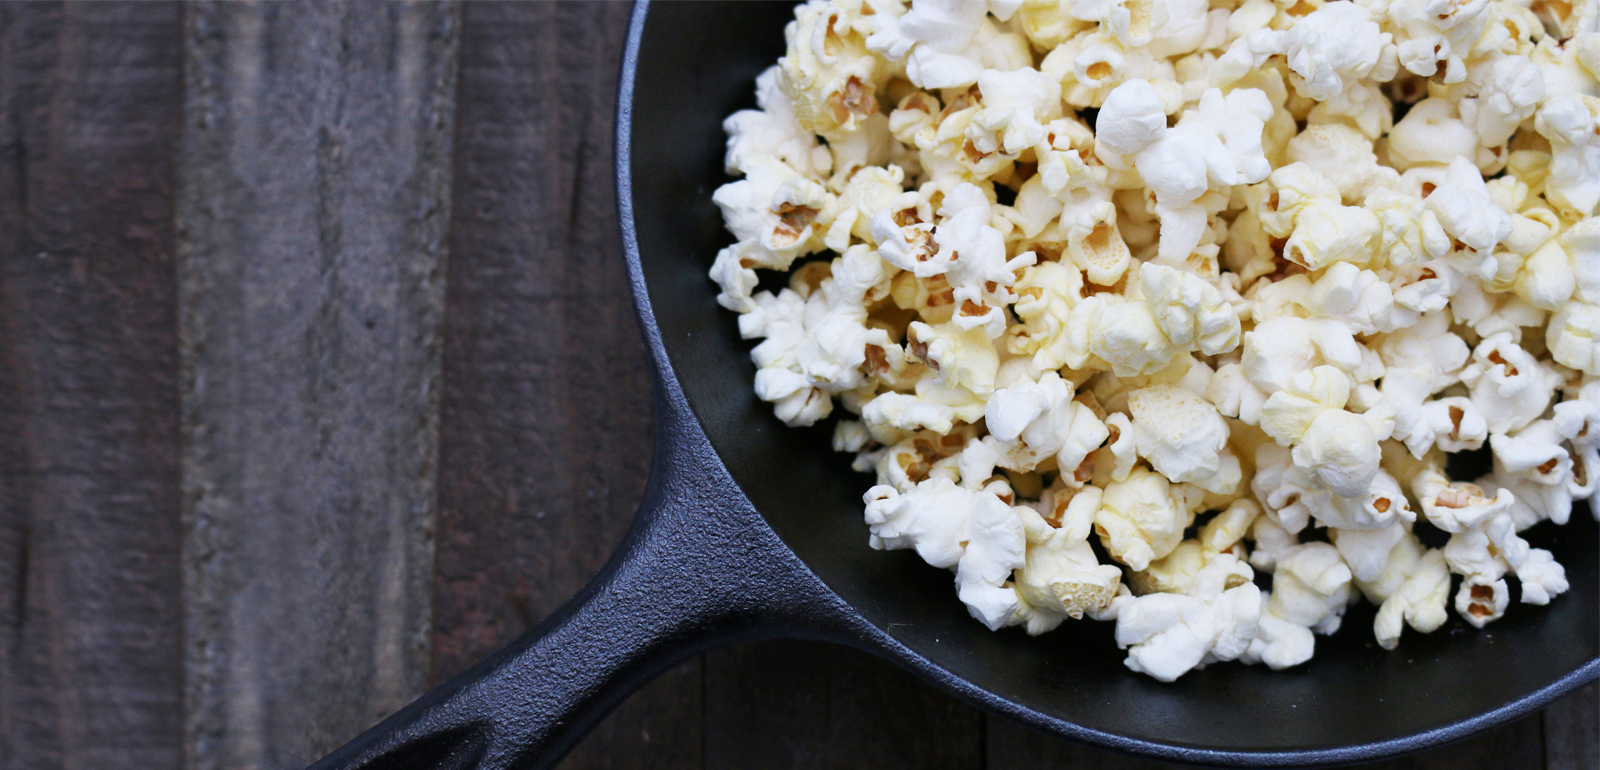 Preferred Popcorn - Simply Delicious Popcorn